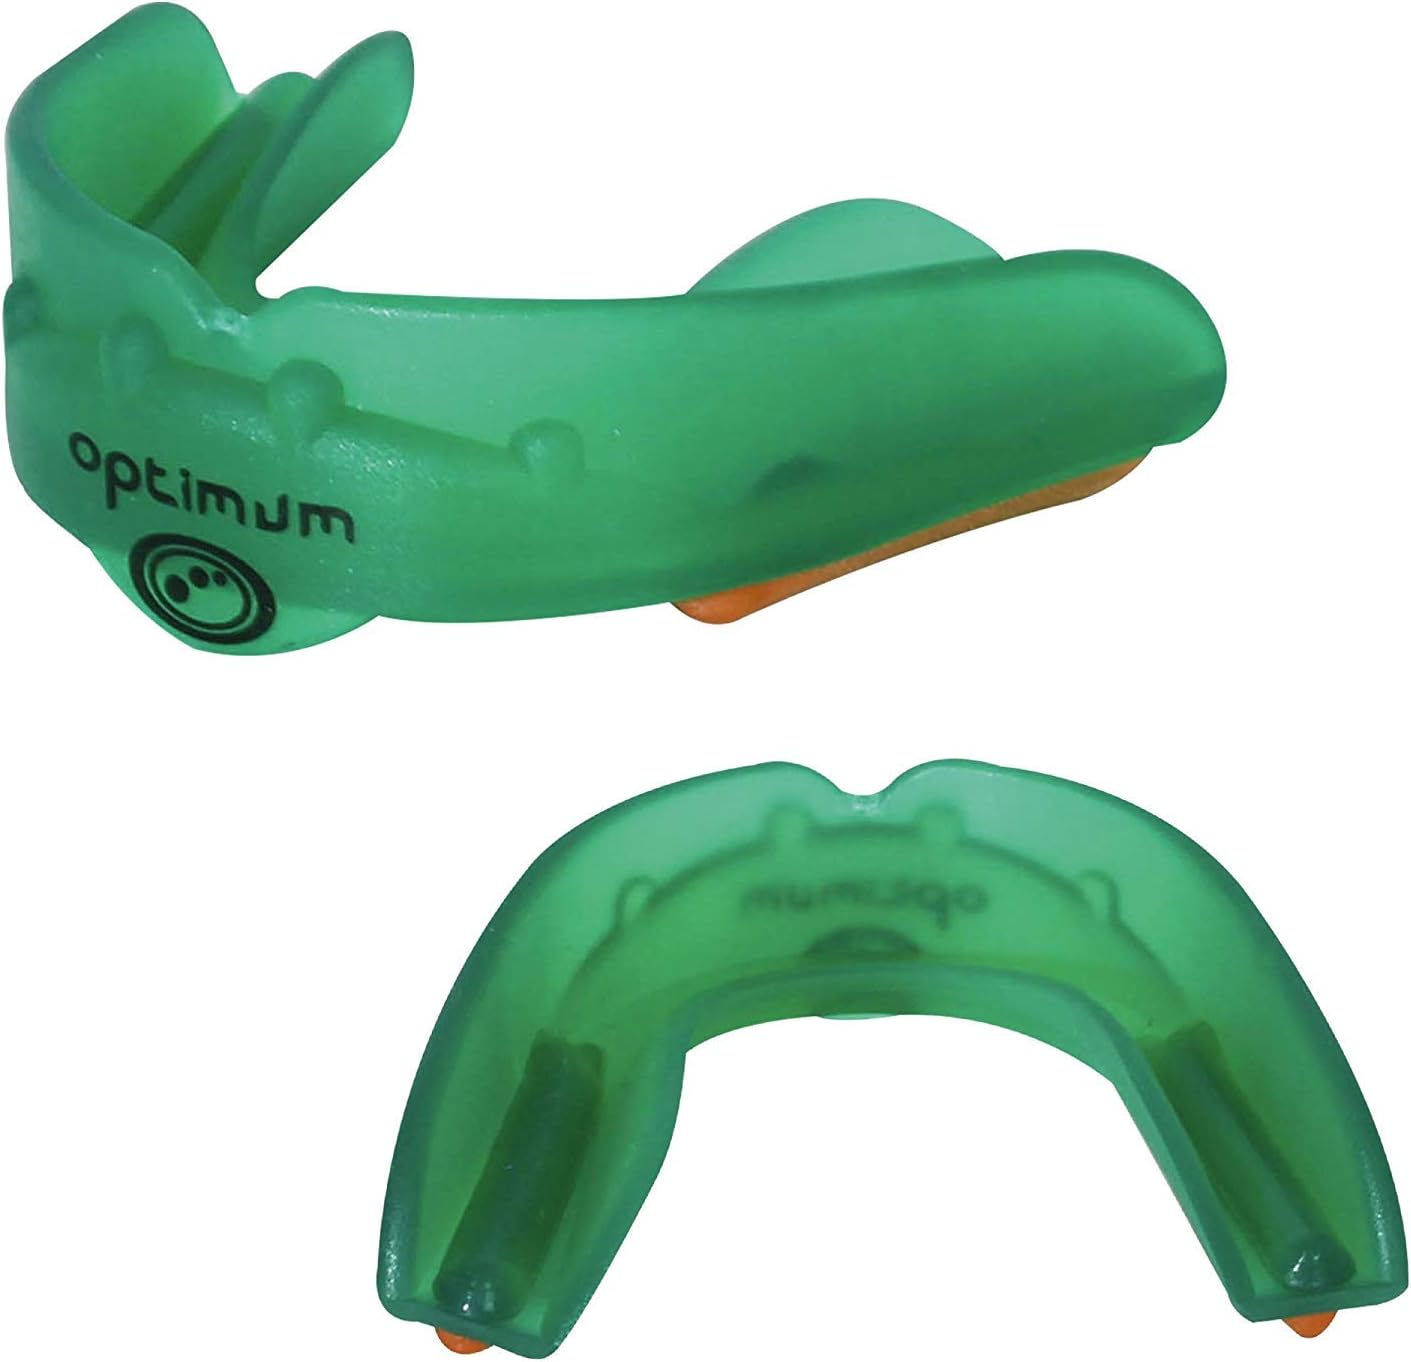 Matrix Mouthguard Green - Optimum